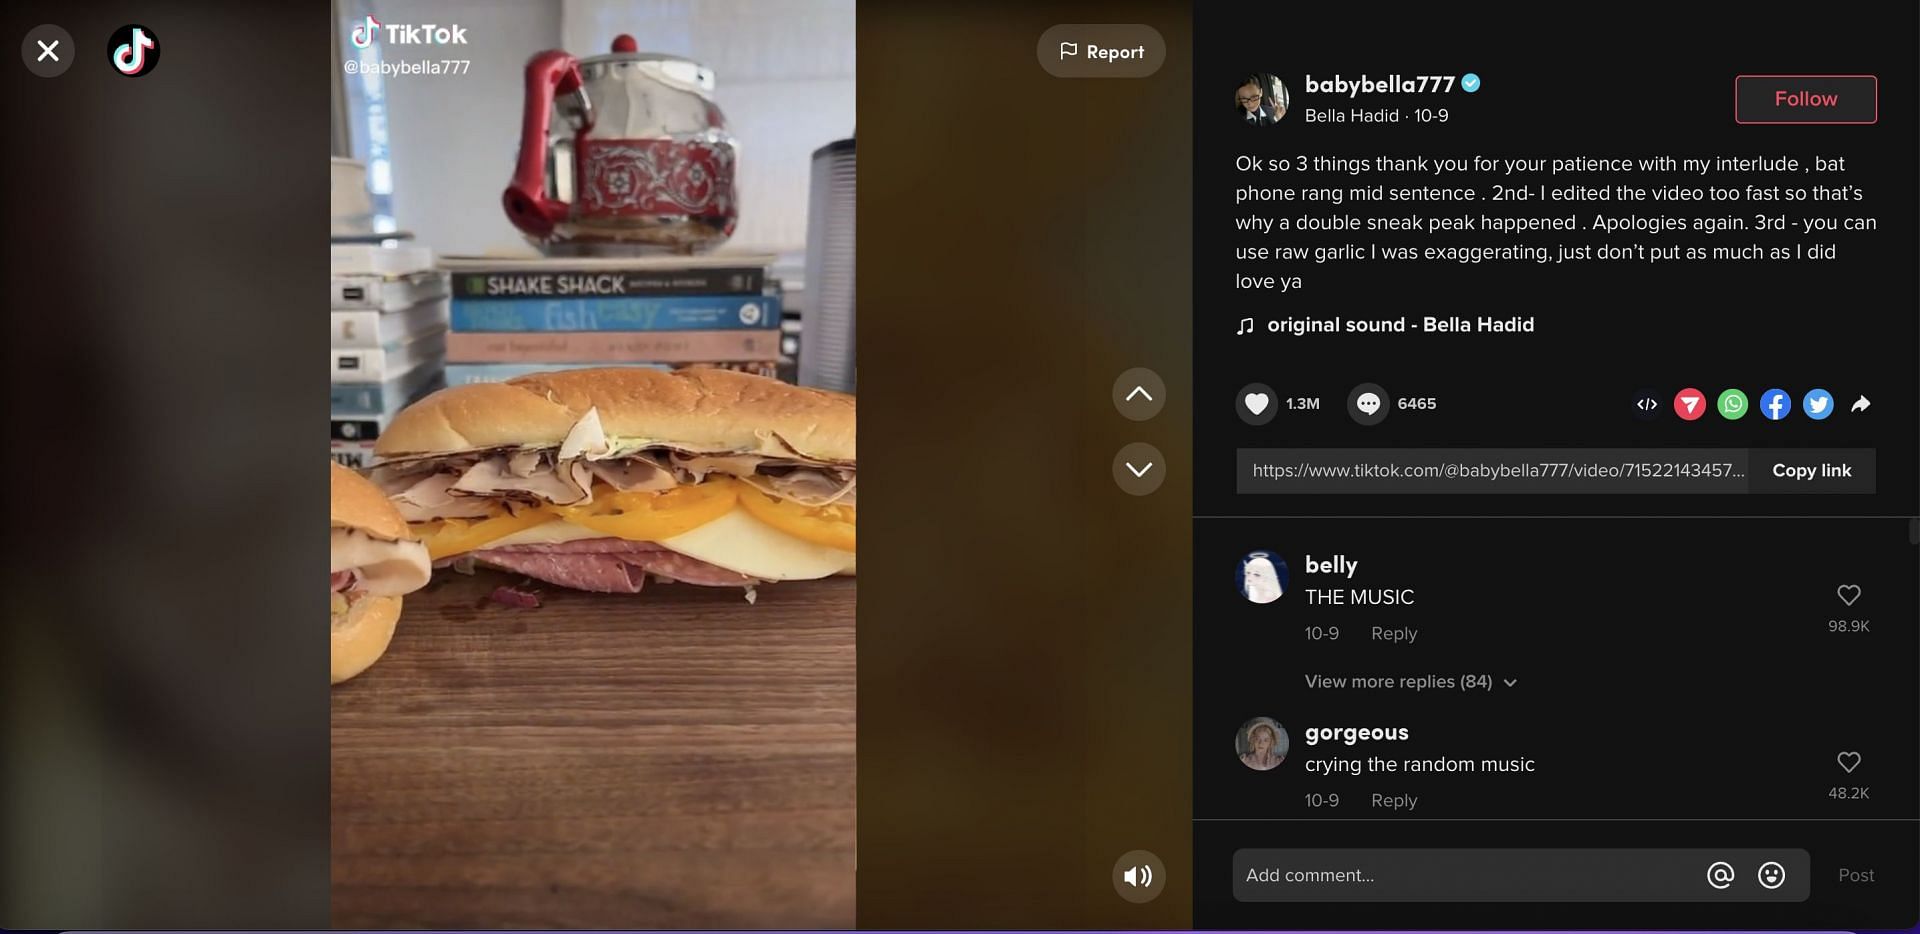 Viral sandwich recipe uploaded by Hadid garners more than 9 million views in just 2 weeks. (Image via Tiktok)